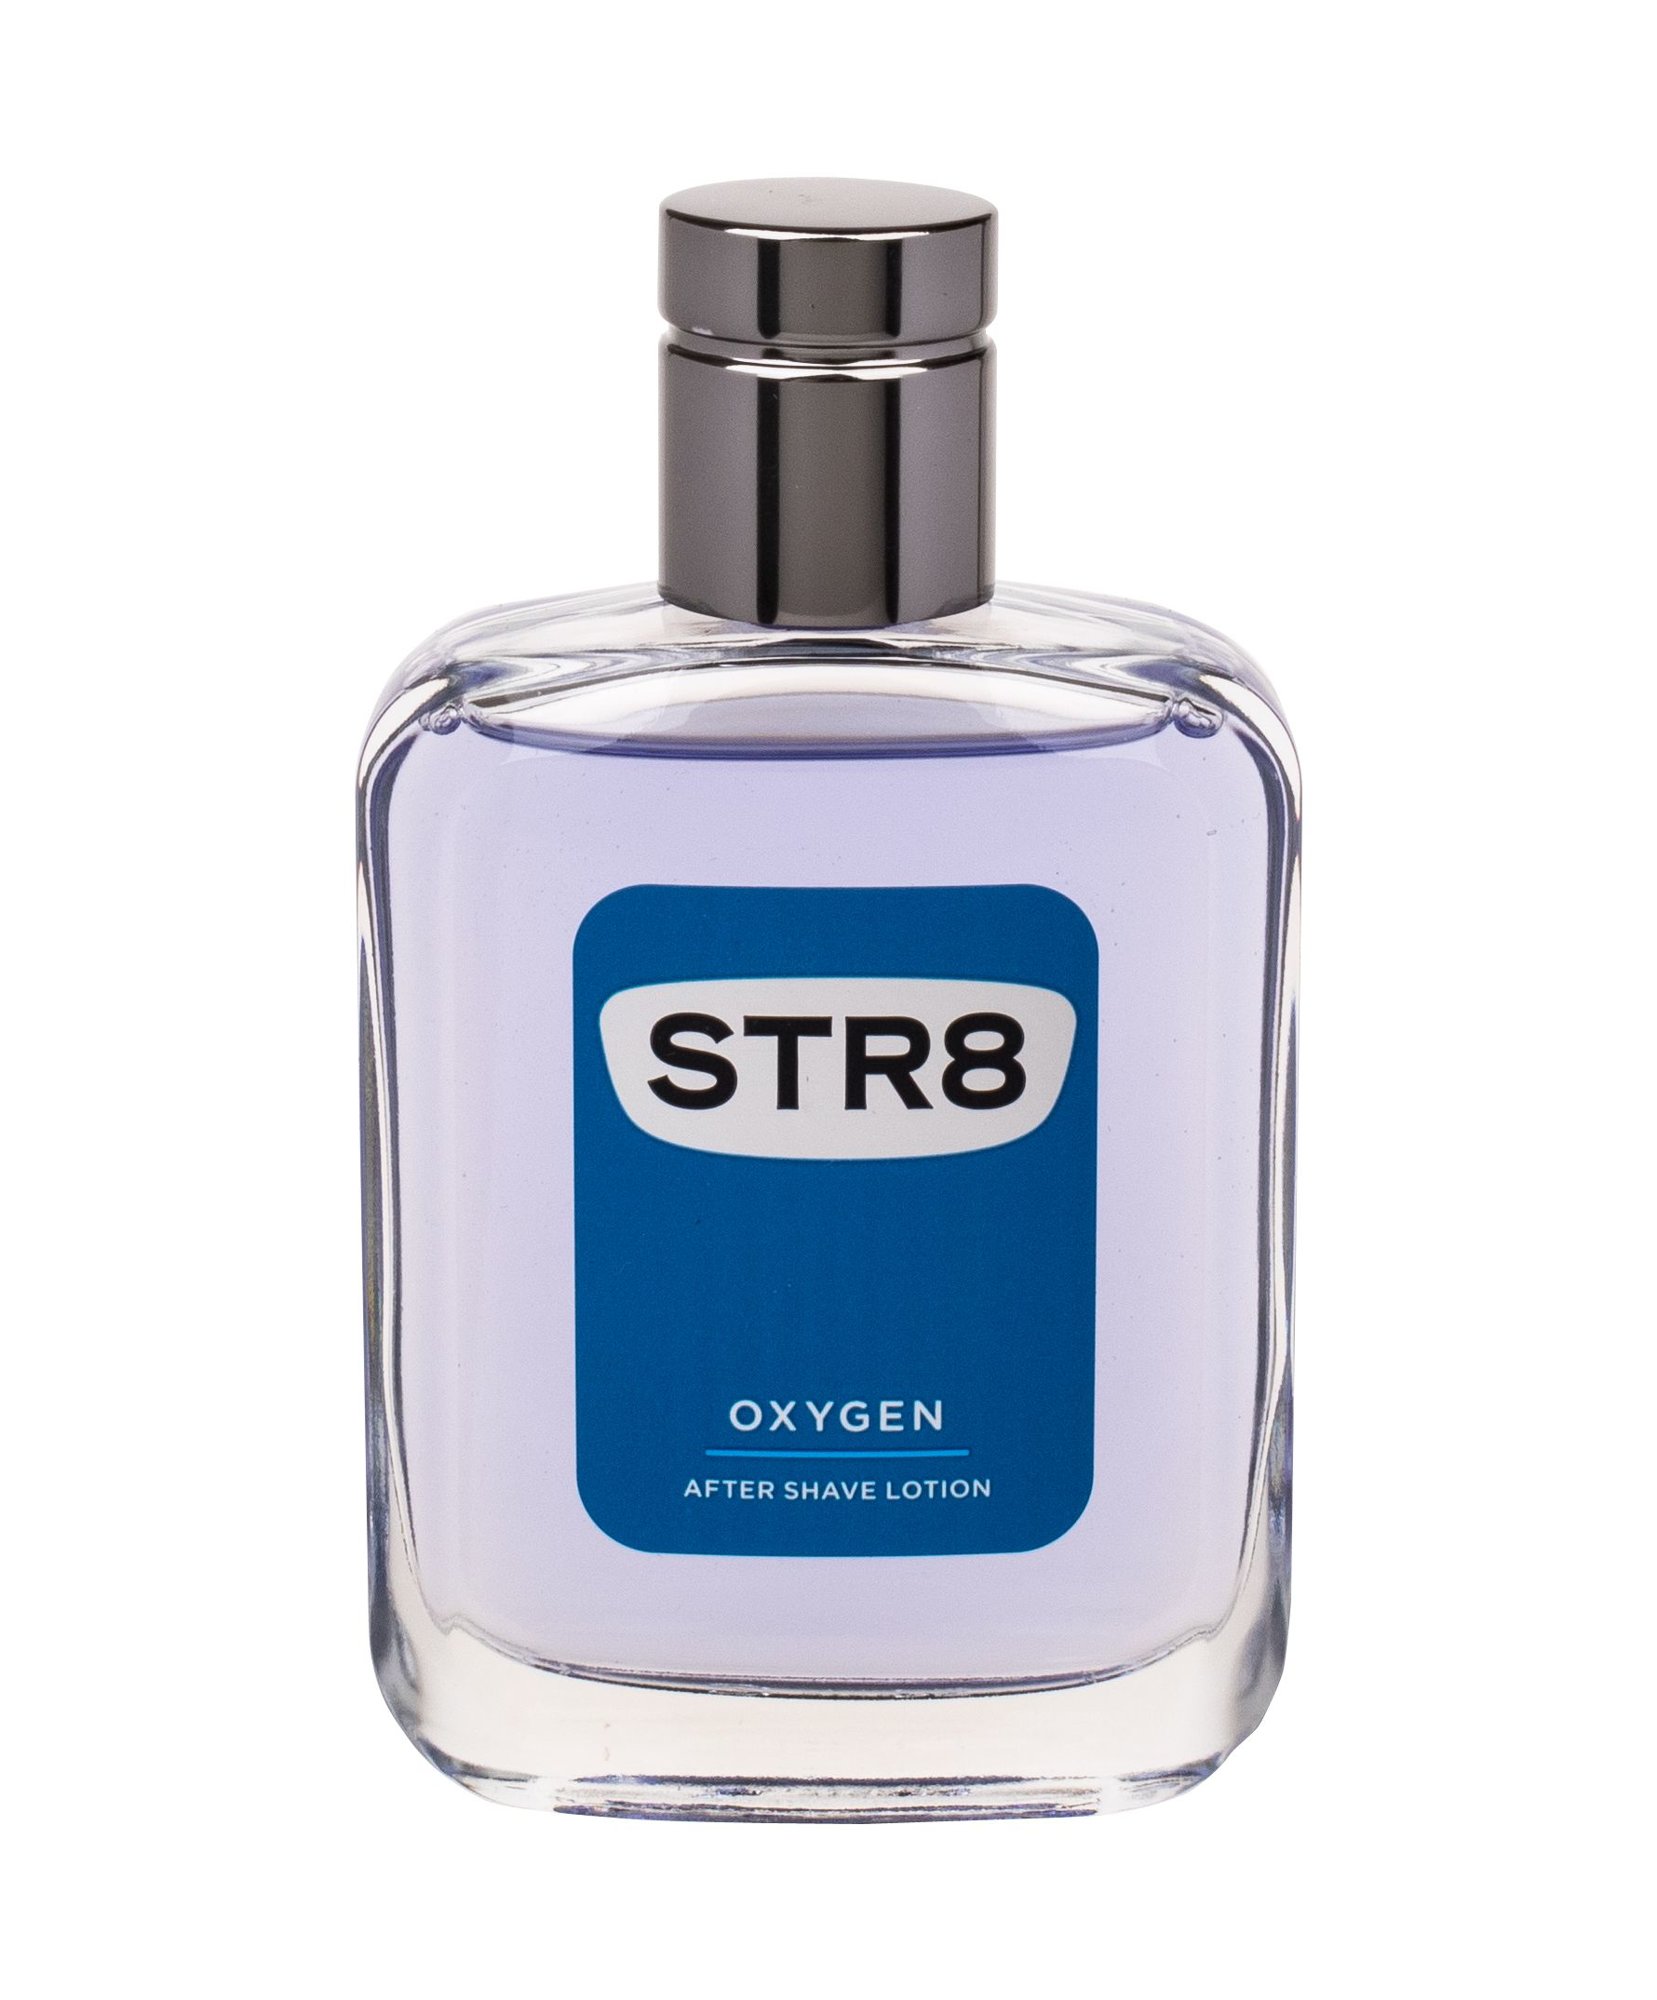 STR8 Oxygen vanduo po skutimosi